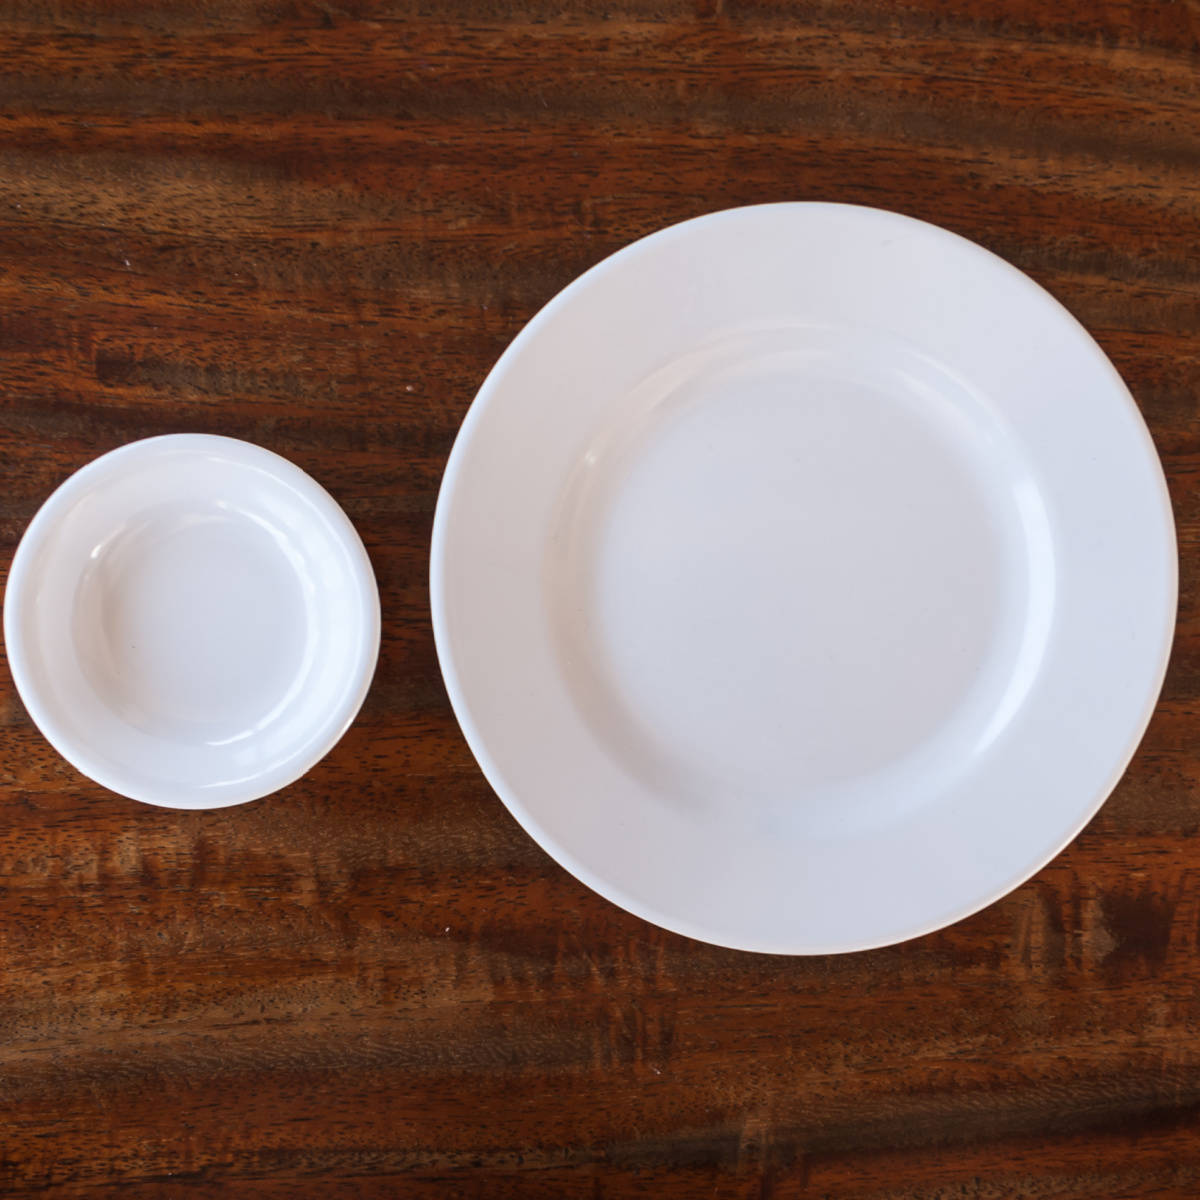 Smaller plates.